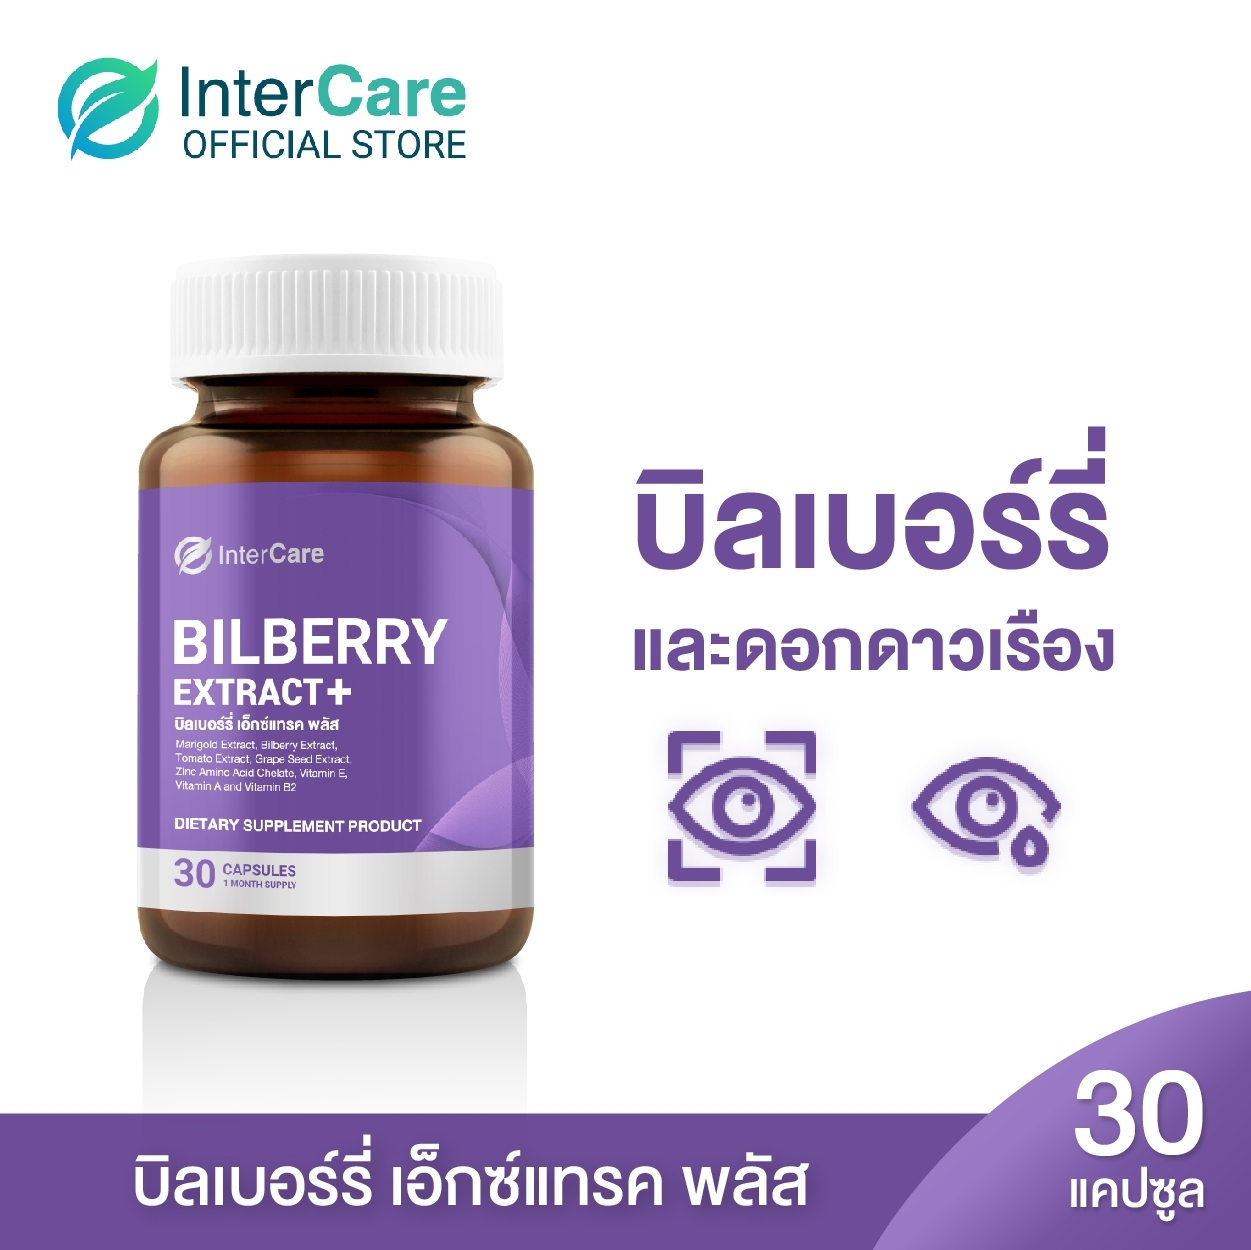 InterCare Bilberry extract plus [ NEW 1 กระปุก 30 แคปซูล] อินเตอร์แคร์ บิลเบอร์รี่ เอ็กซ์แทรคพลัส สกัดจาก บิลเบอร์รี่และลูทีน ช่วยบำรุงสายตา